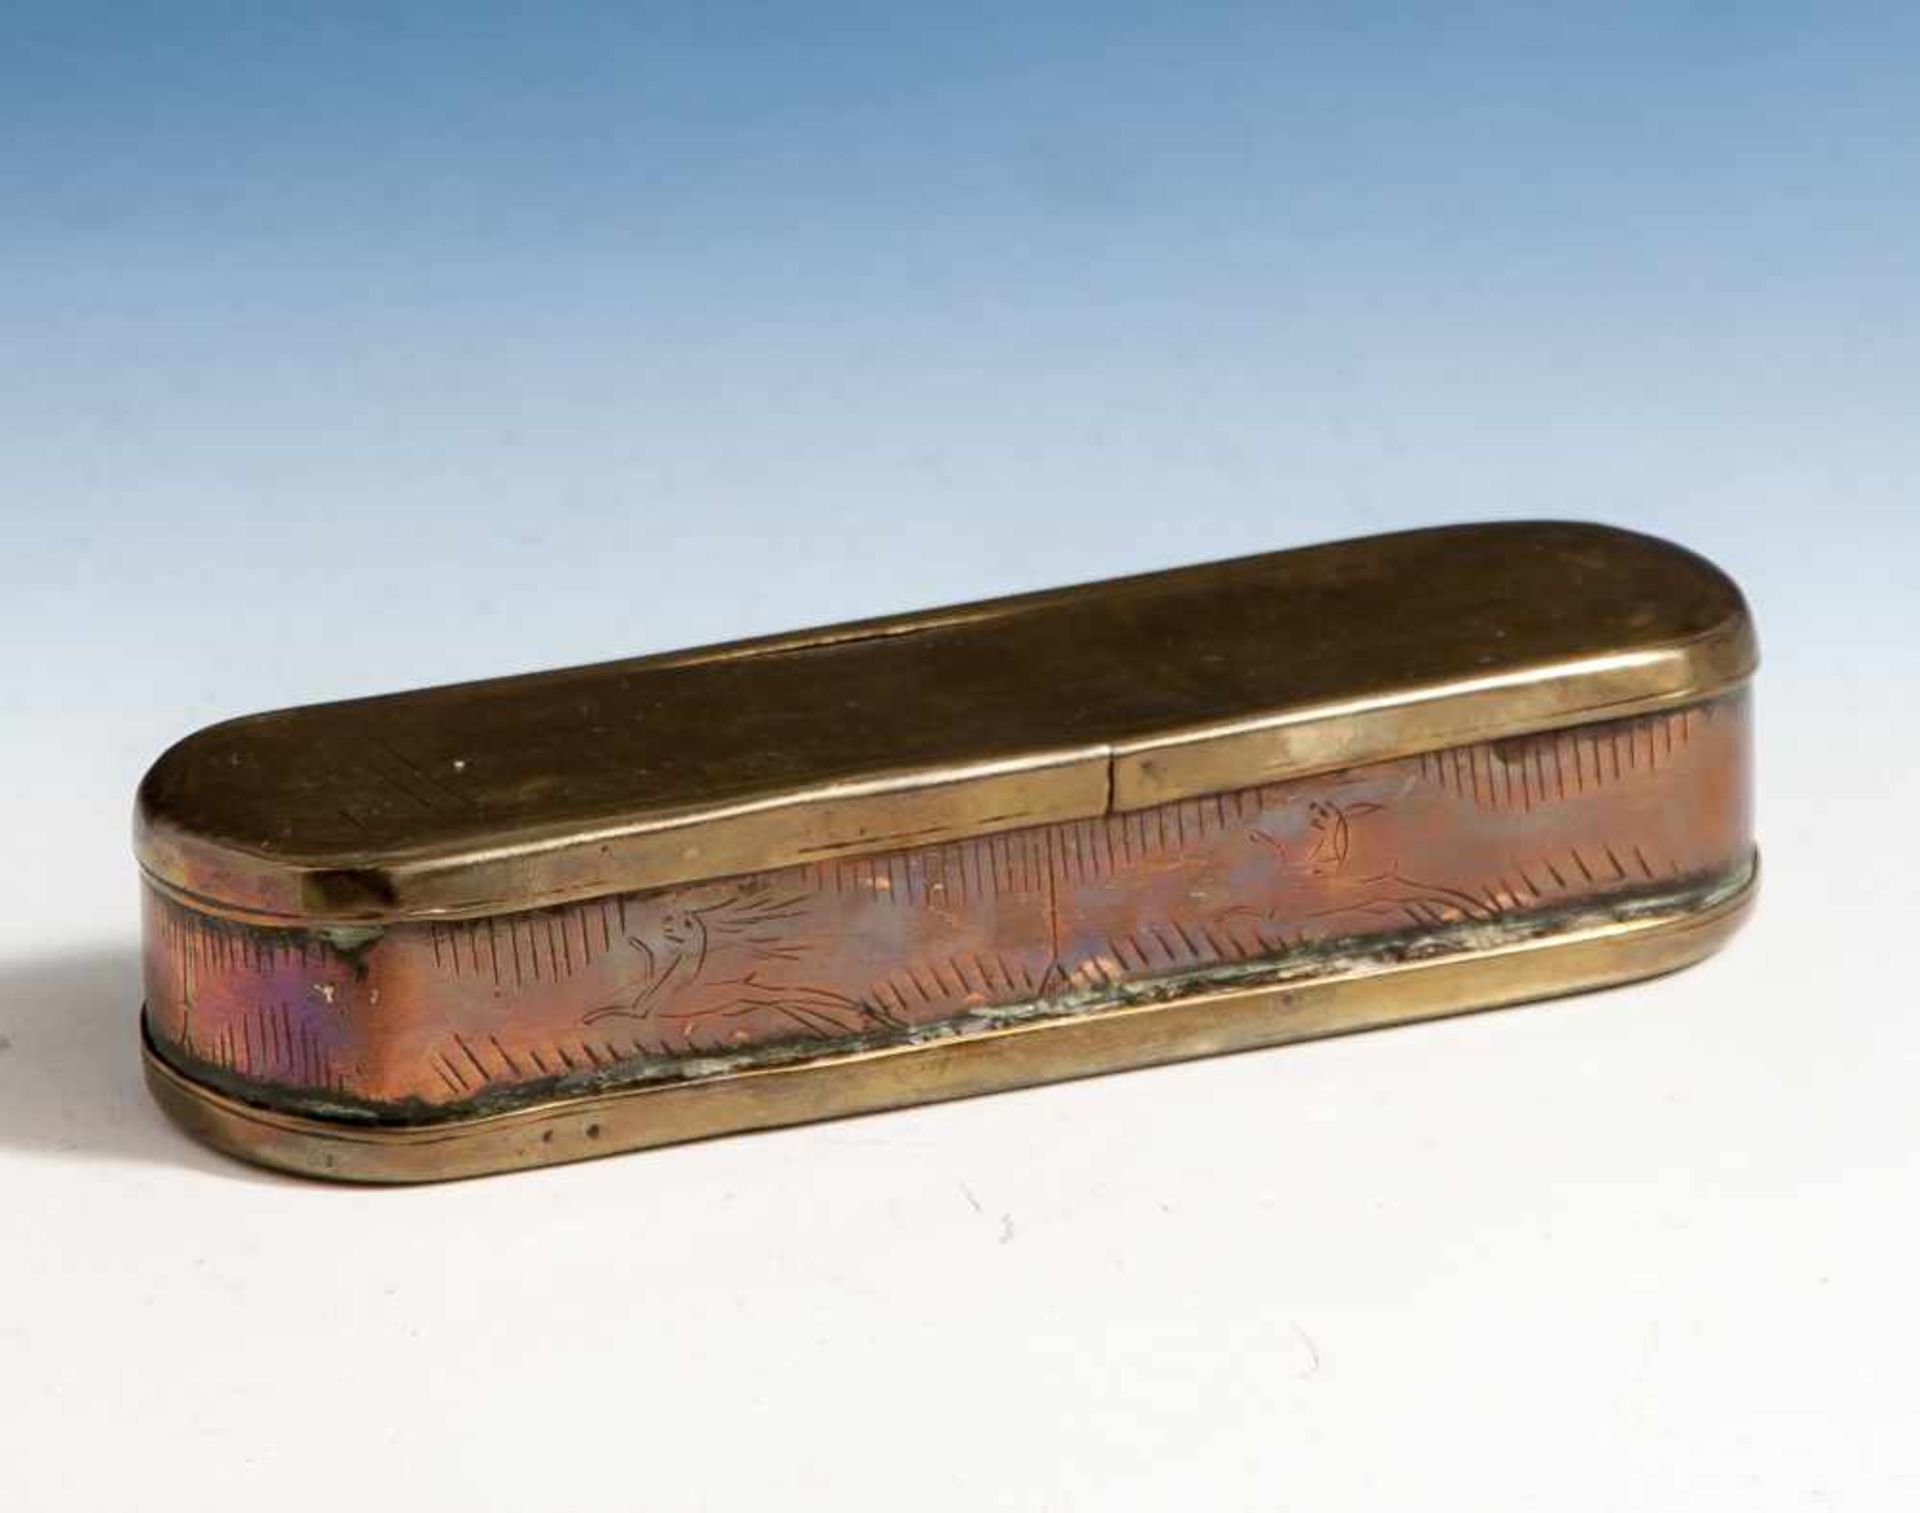 Tabakdose, wohl Holland 18. Jahrhundert, Messing/Kupfer, Rechtecksform mit abgerundeten Kanten,